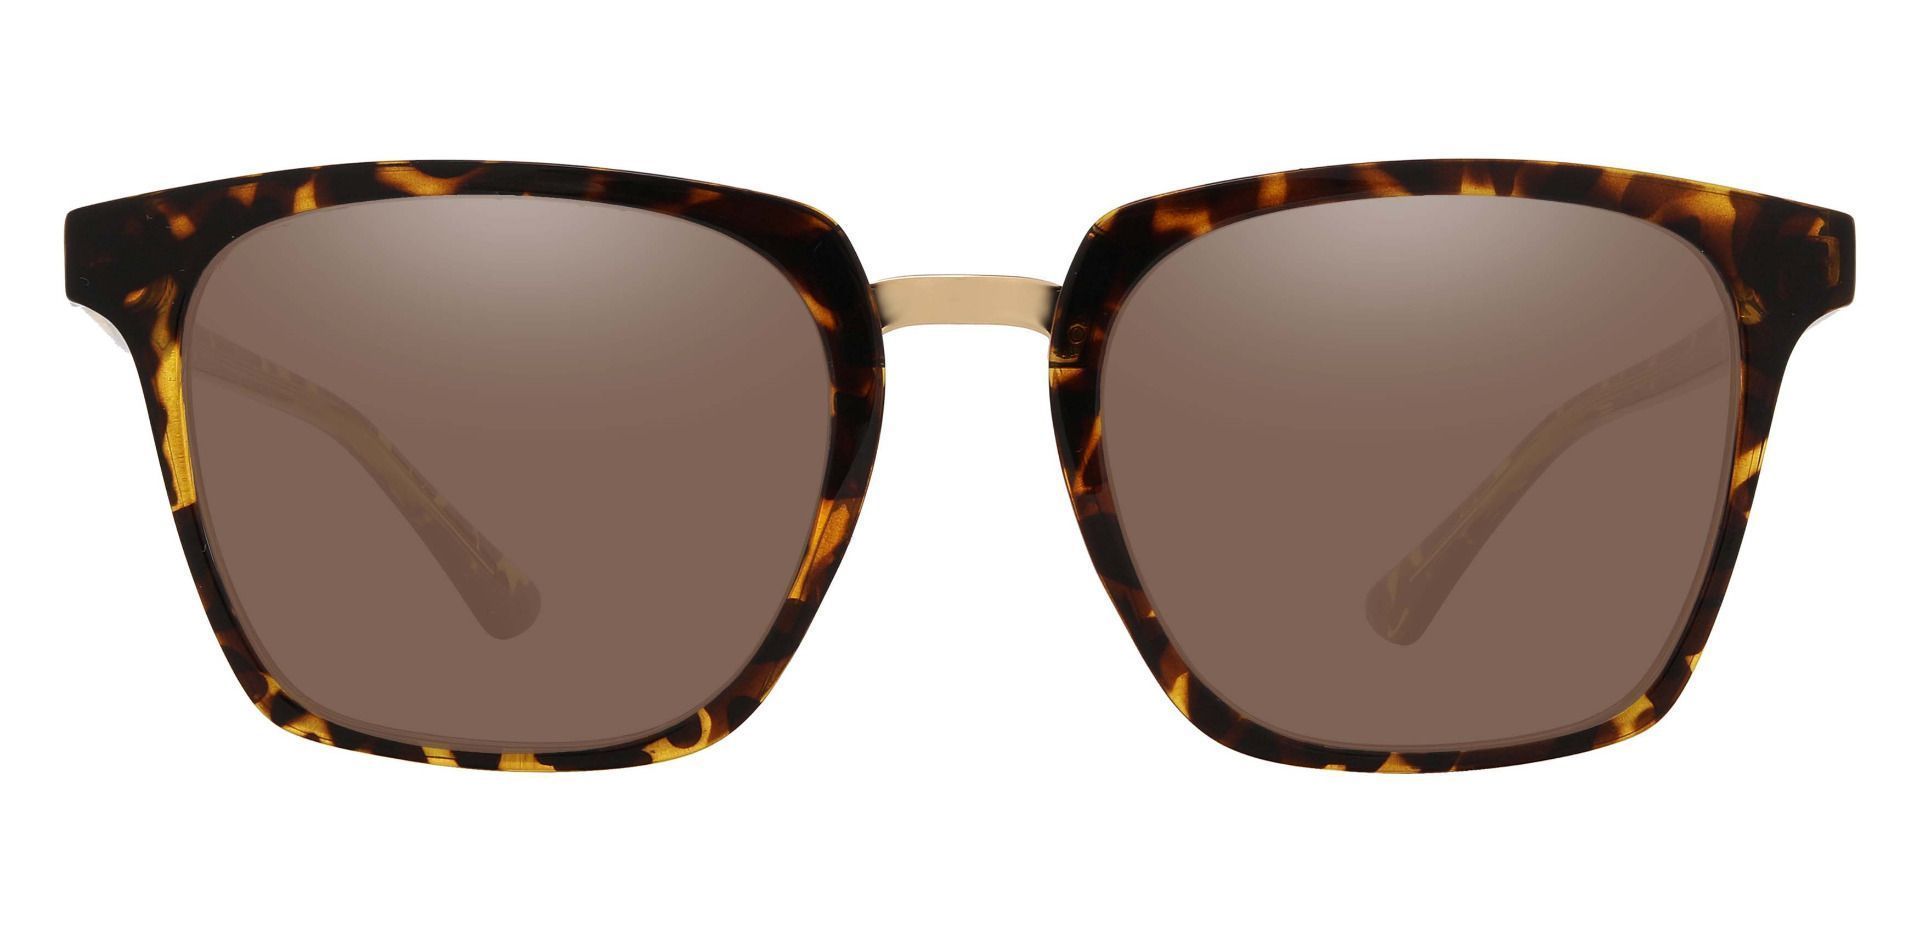 Delta Square Prescription Sunglasses - Tortoise Frame With Brown Lenses